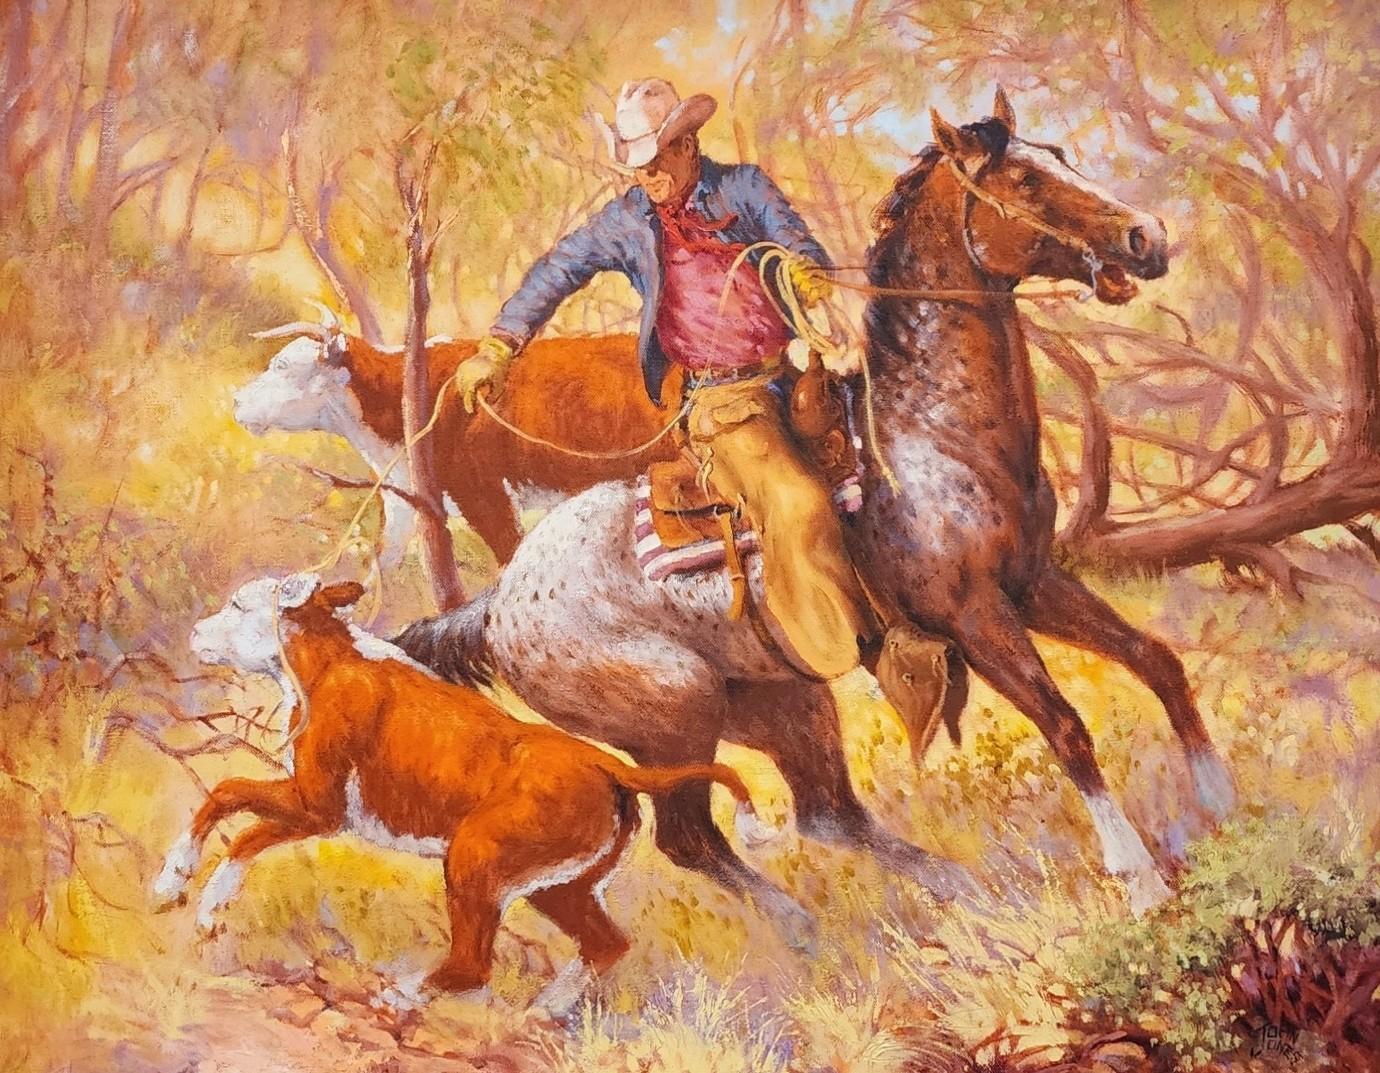 The Capture, Cowboy, Herding Cattle, Vintage Western Art, Horse, Lassoing Cows - Painting by John Jones